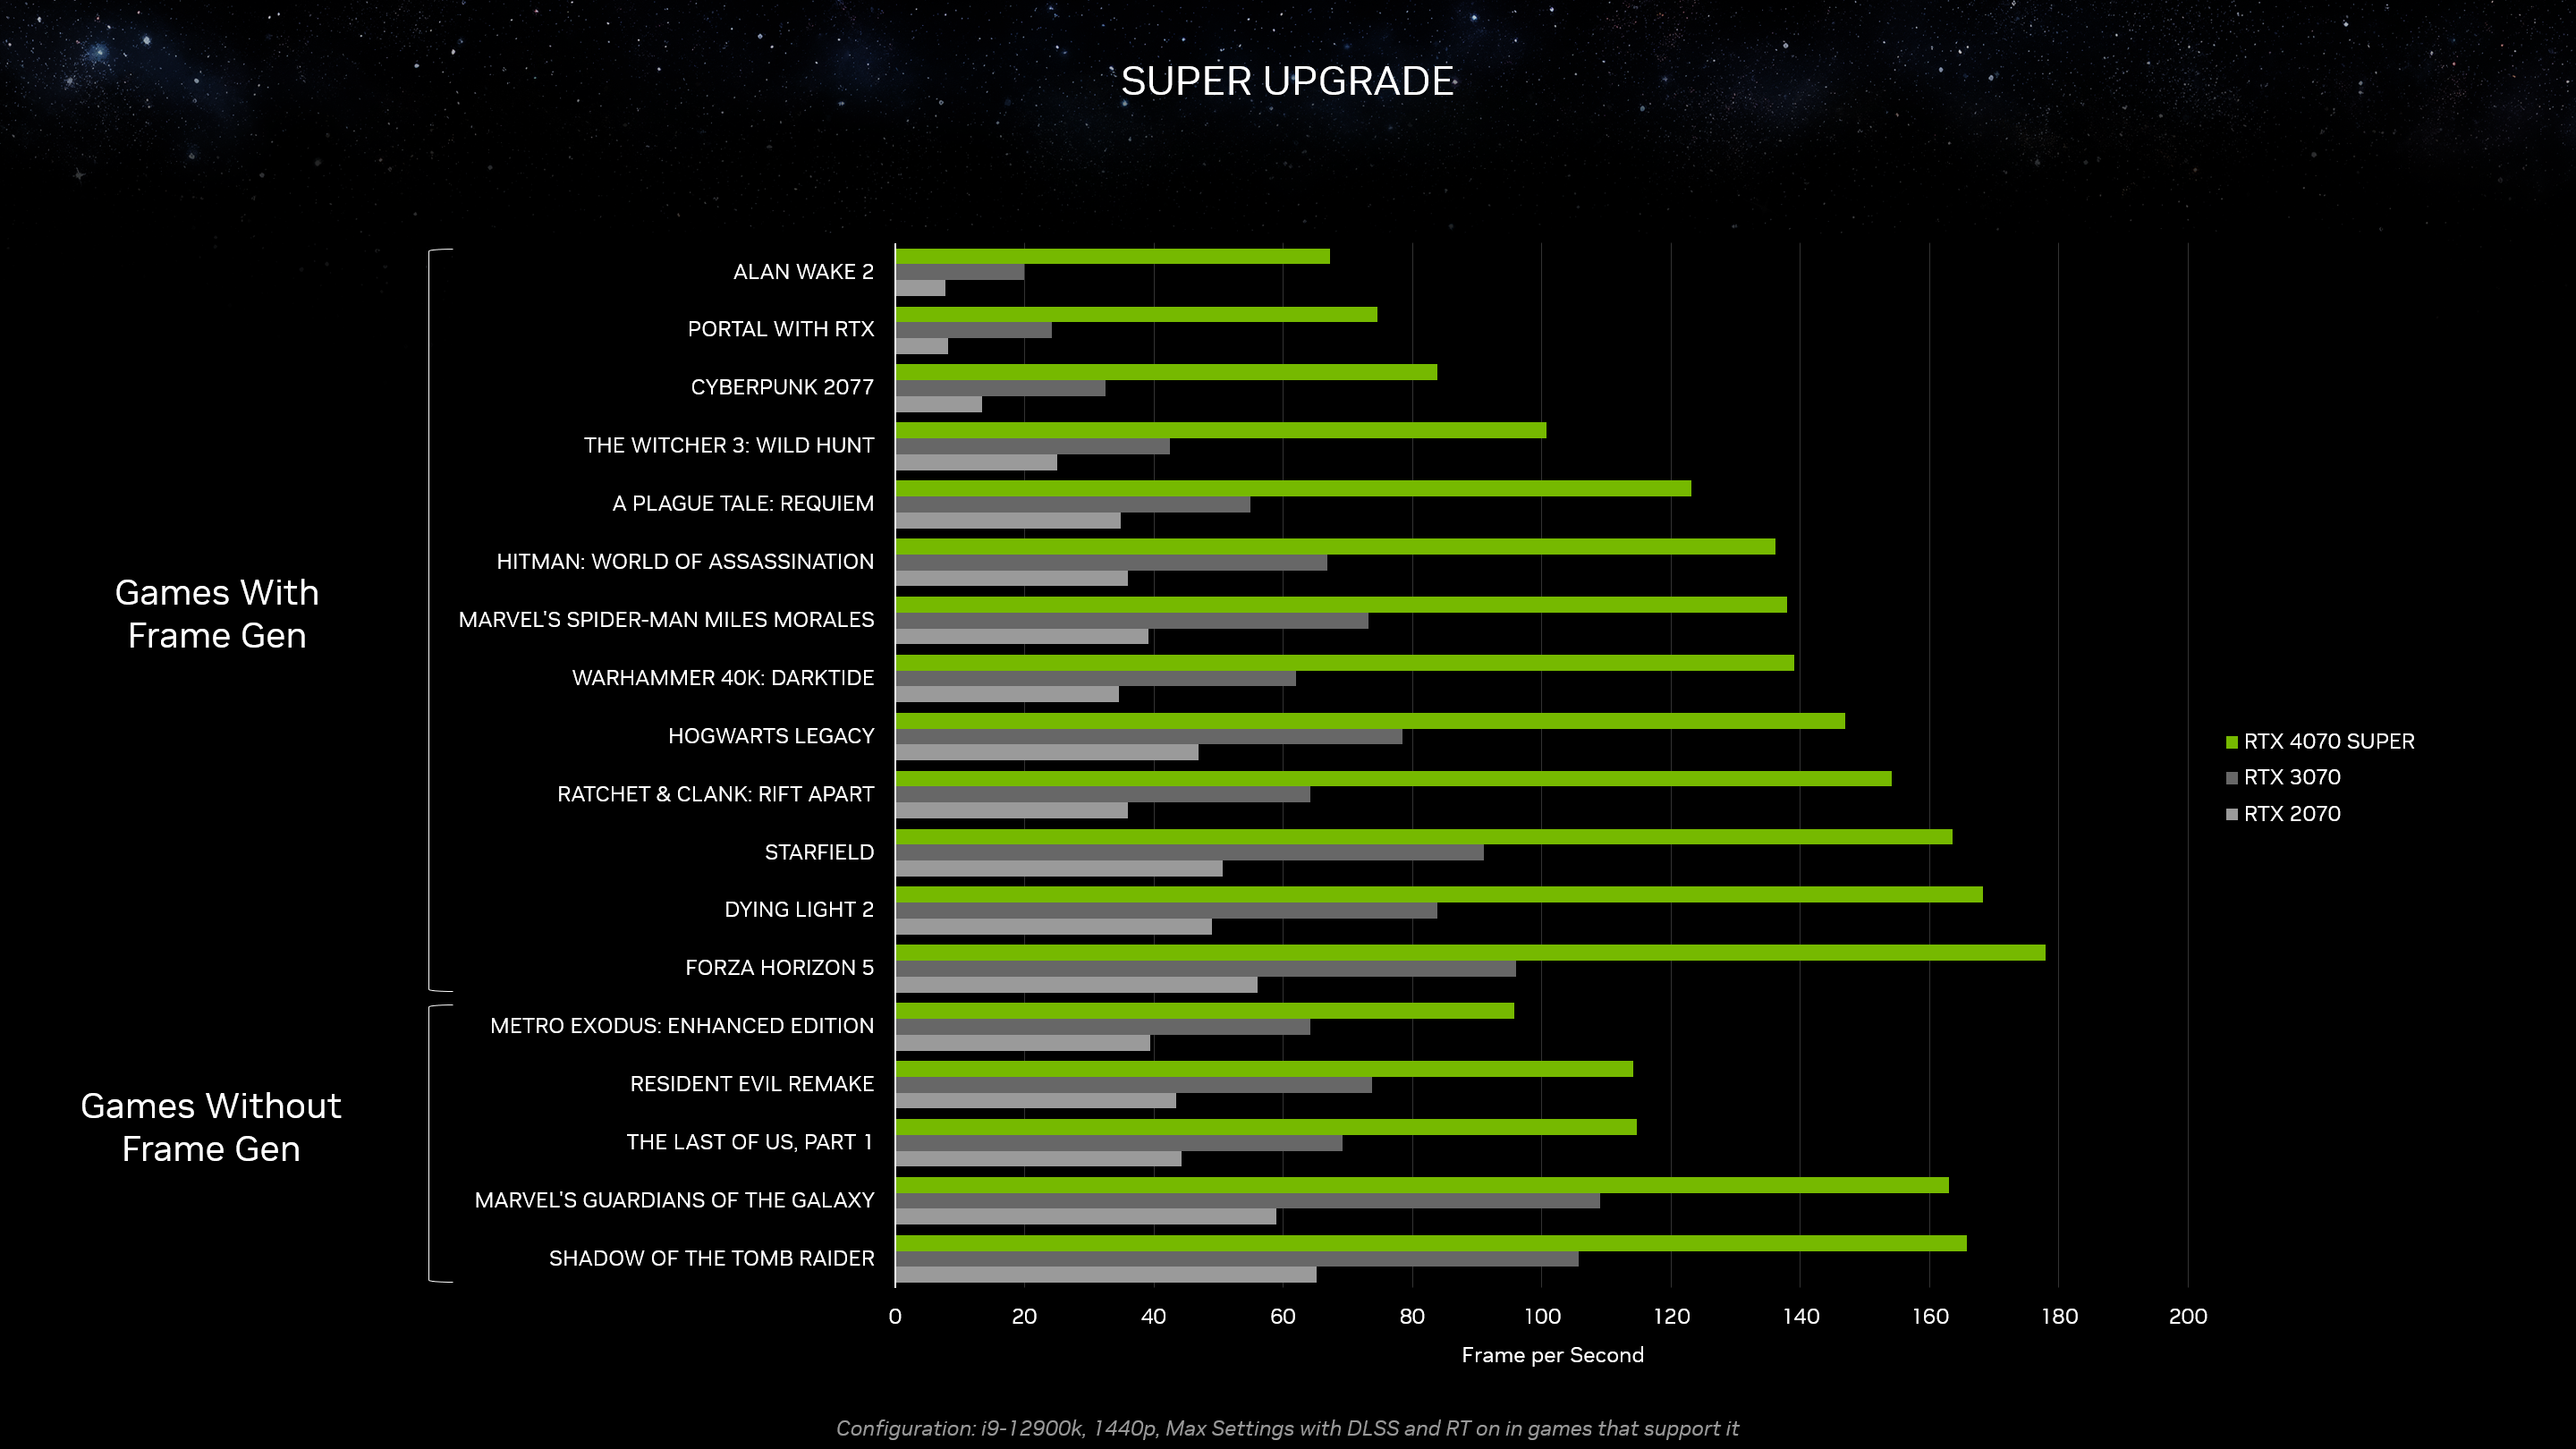 16GB! Retail leak reveals Nvidia's RTX 4070 Ti SUPER specs - OC3D